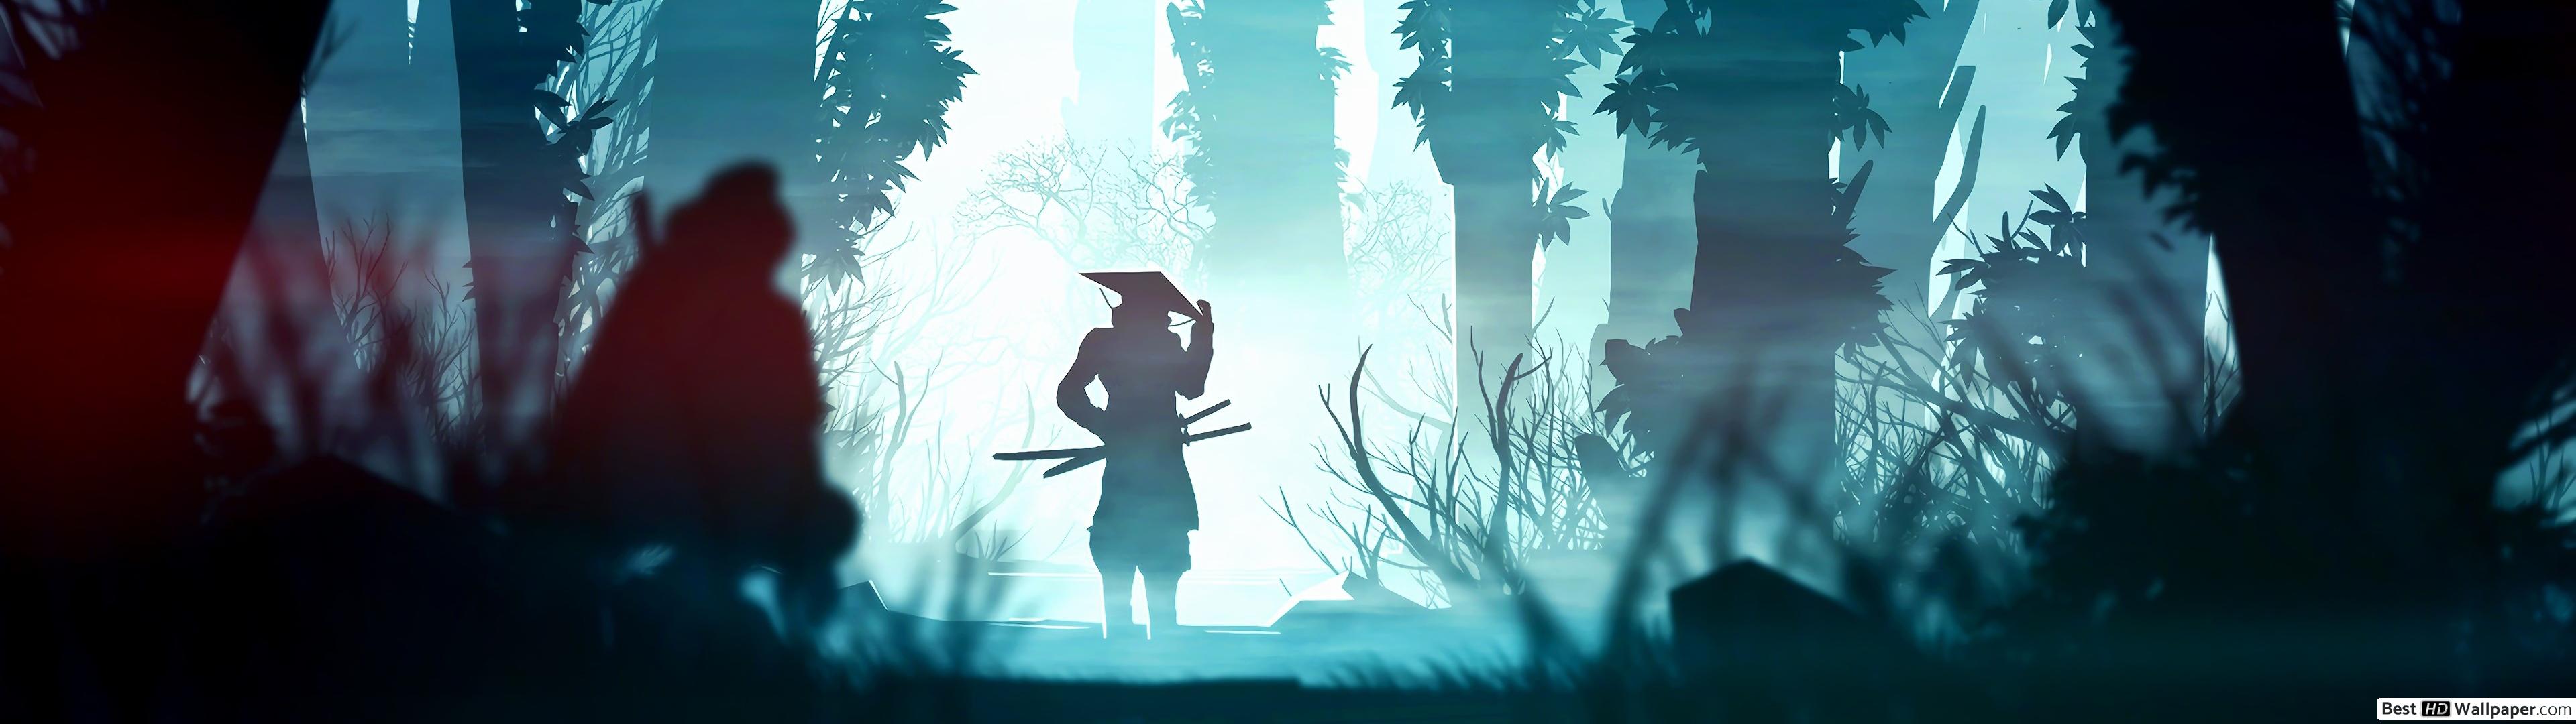 Samurai Silhouette Forest HD wallpaper download